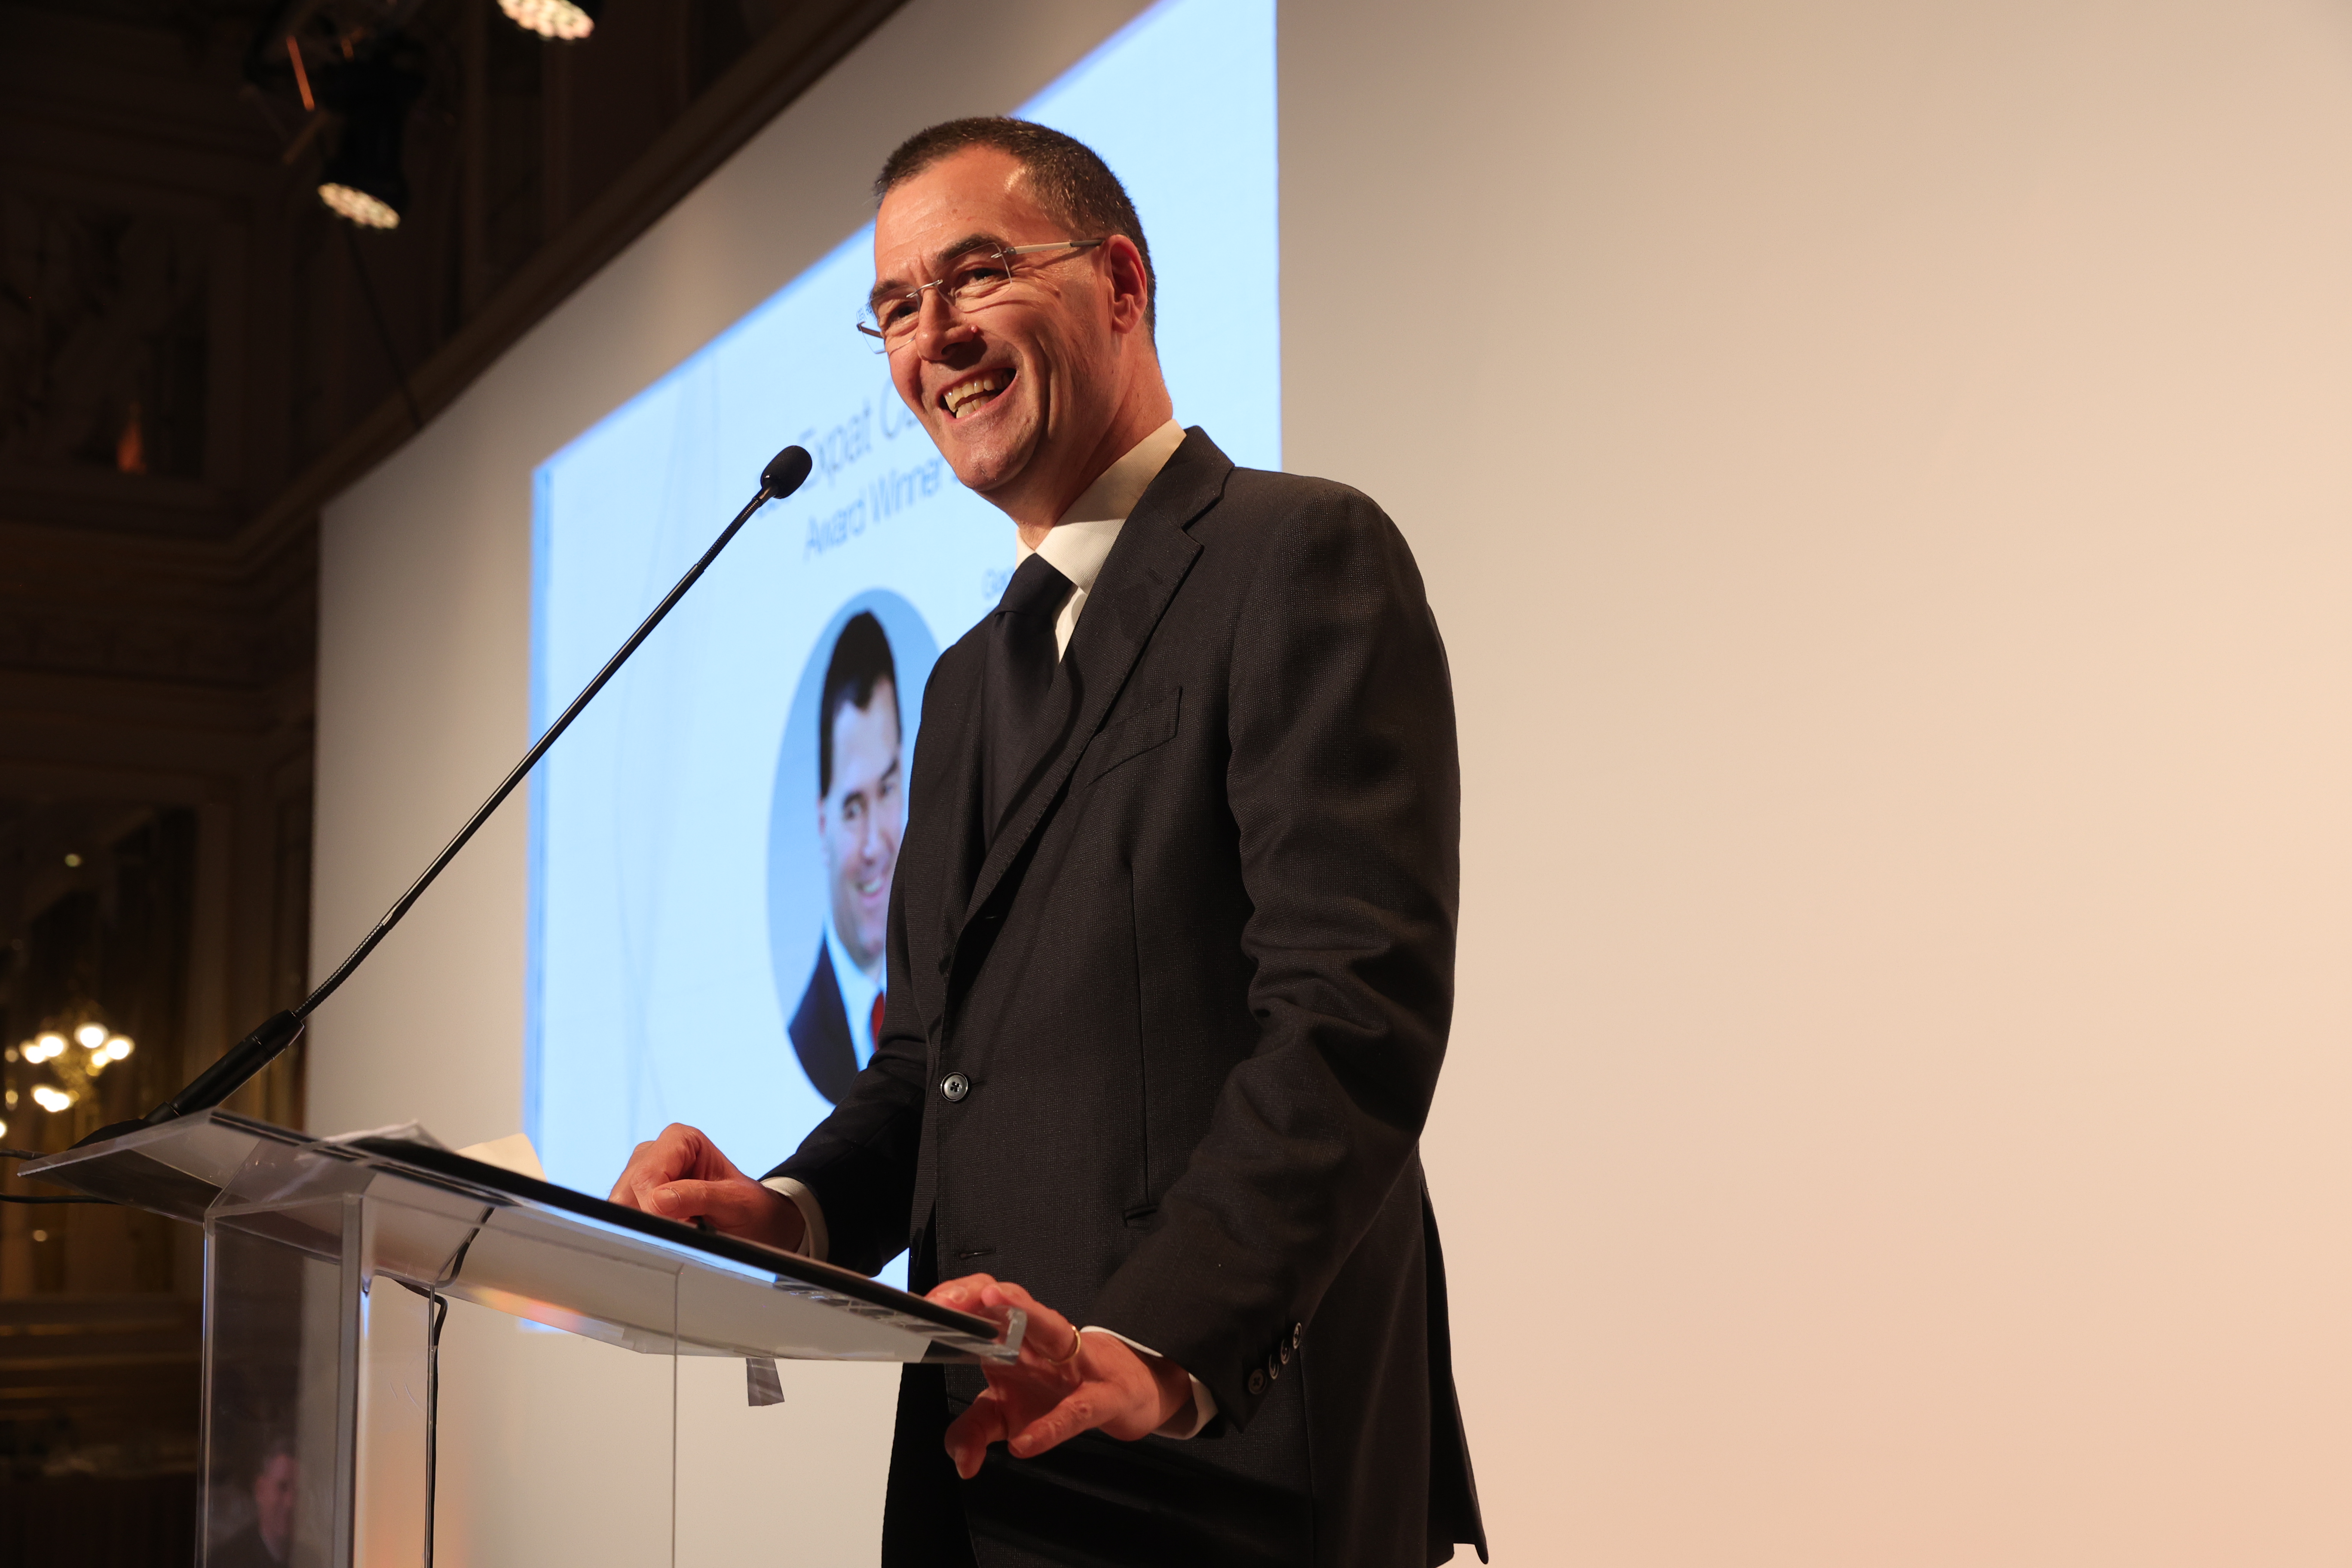 Giacomo Pedranzini wins Expat CEO of the Year Award